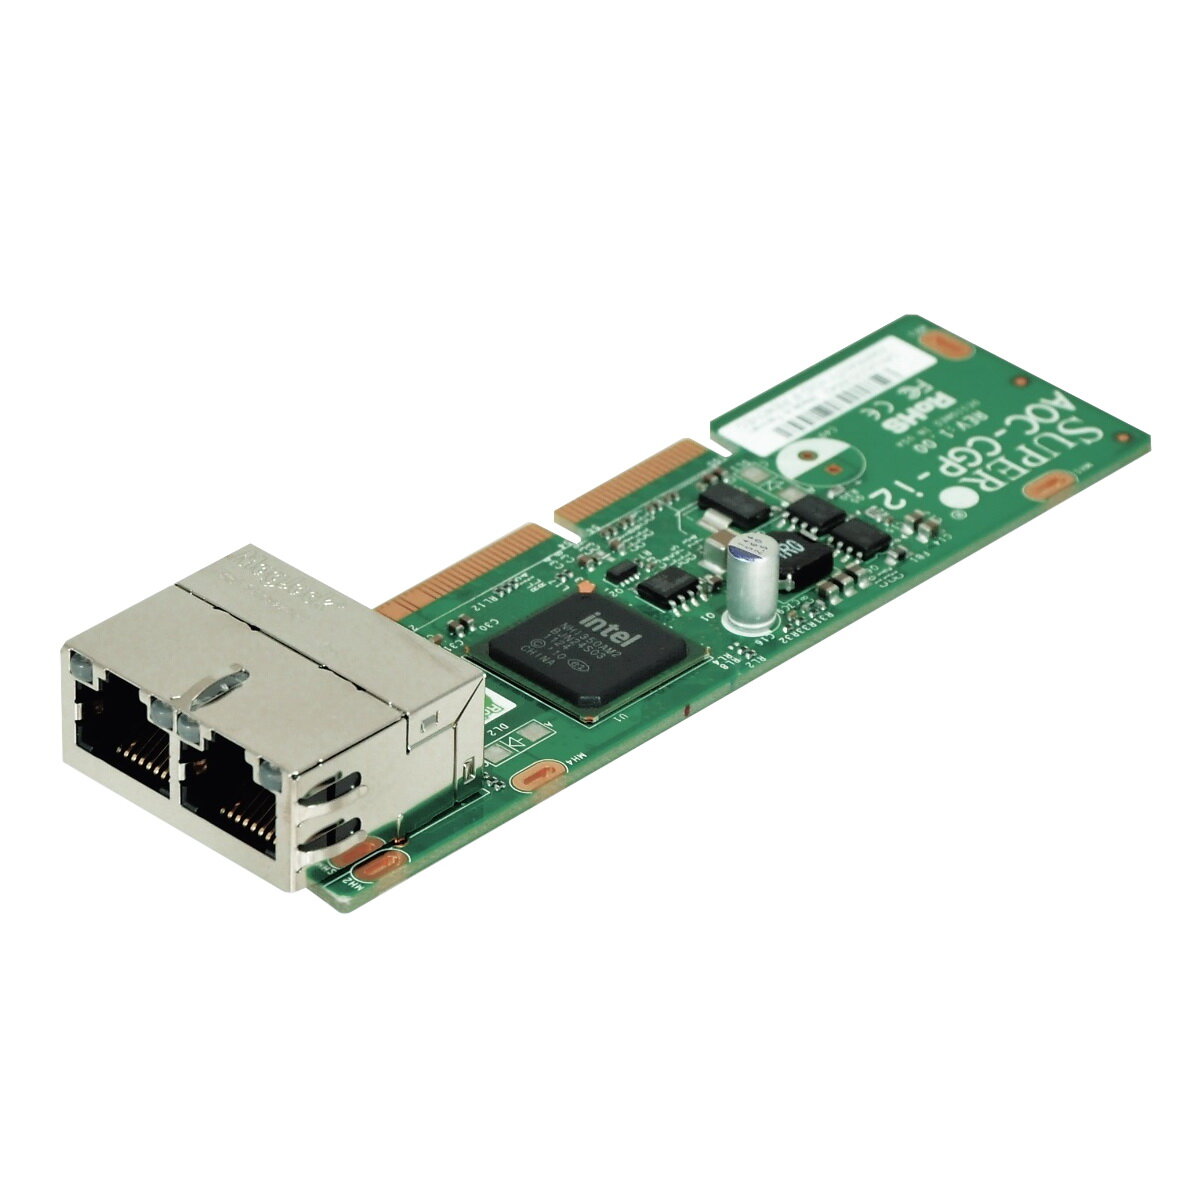 Supermicro AOM-CGP-I2M Intel i350 MicroLP 2-port Gigabit Ethernet Card